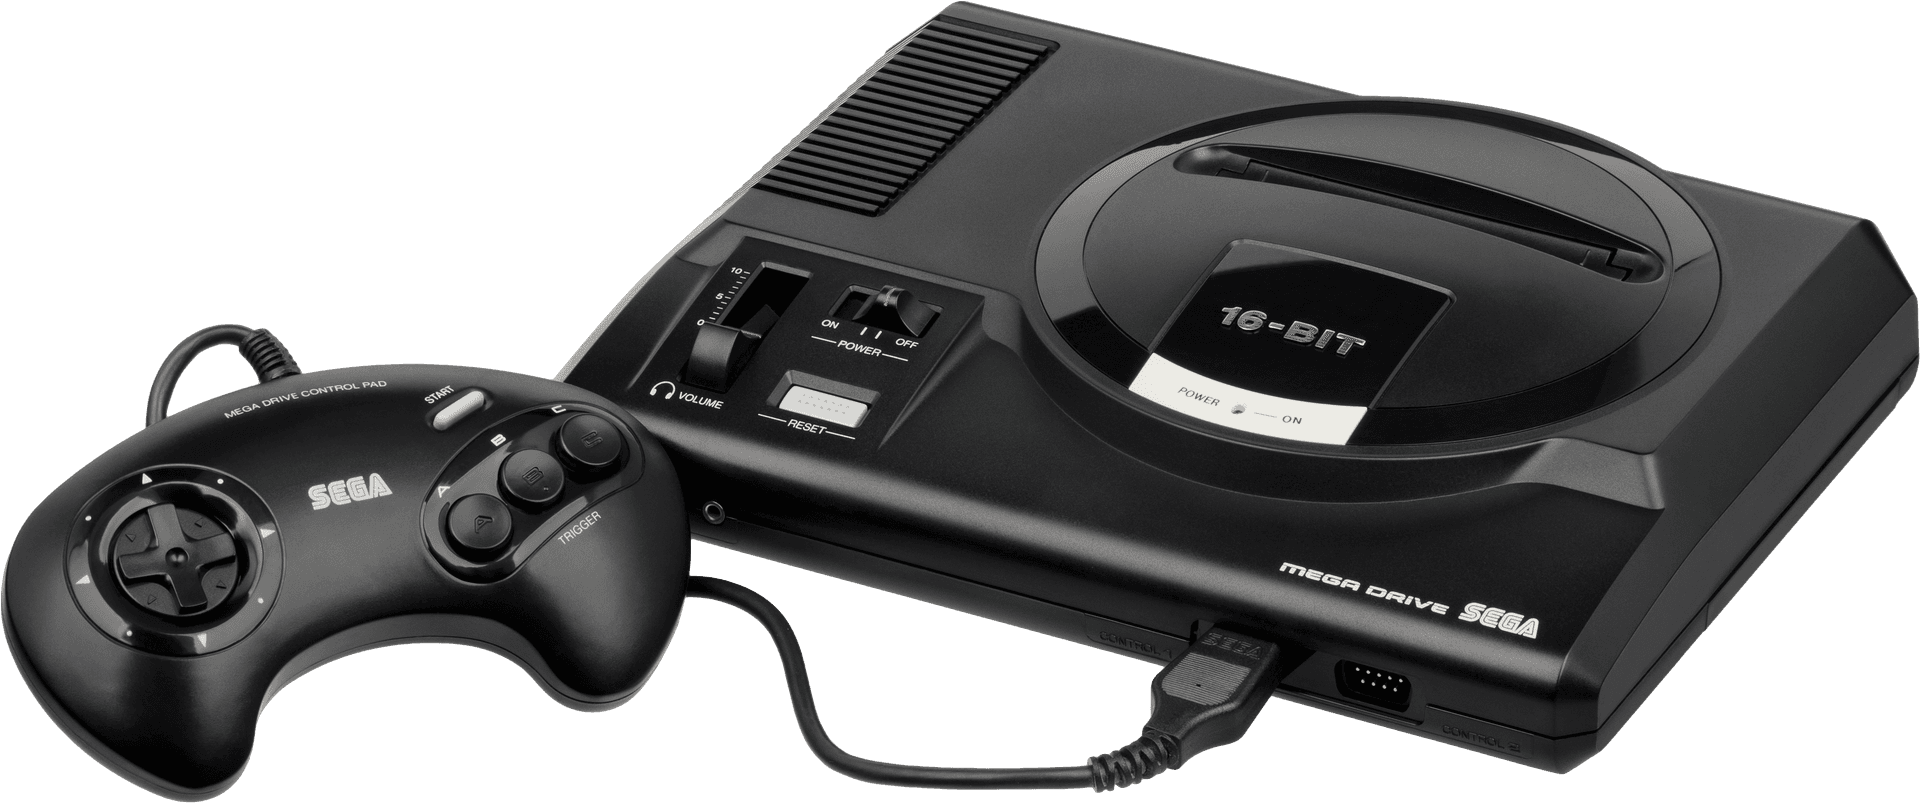 Sega Mega Drive Consoleand Controller PNG image